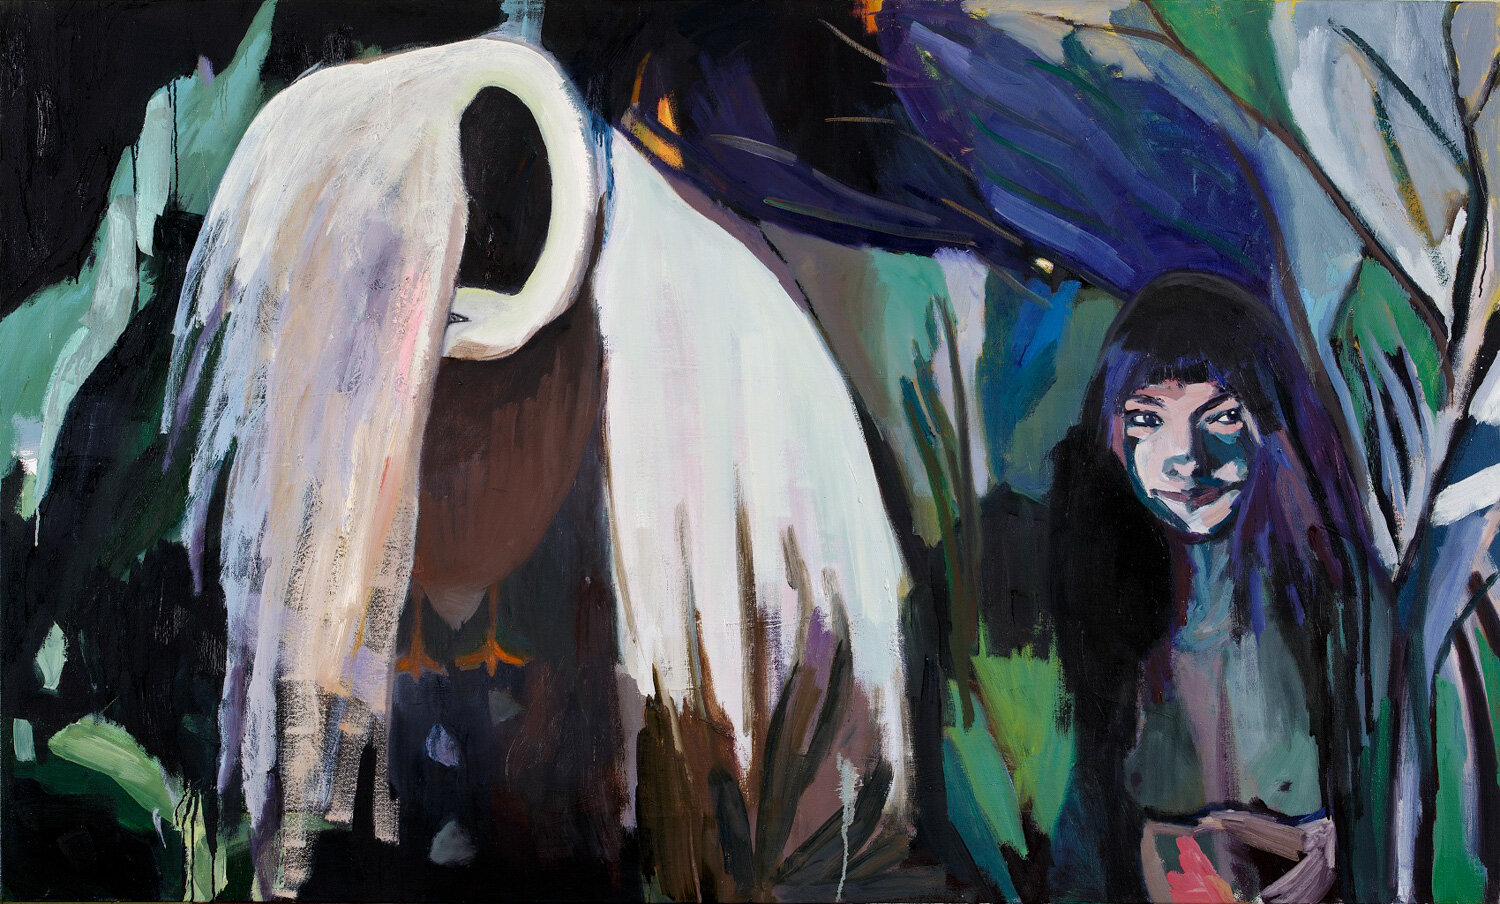 Talya Raz, "Swan and Girl", Oil on canvas, 90/150 cm, 2018, Photography credit: Dafna Gazit